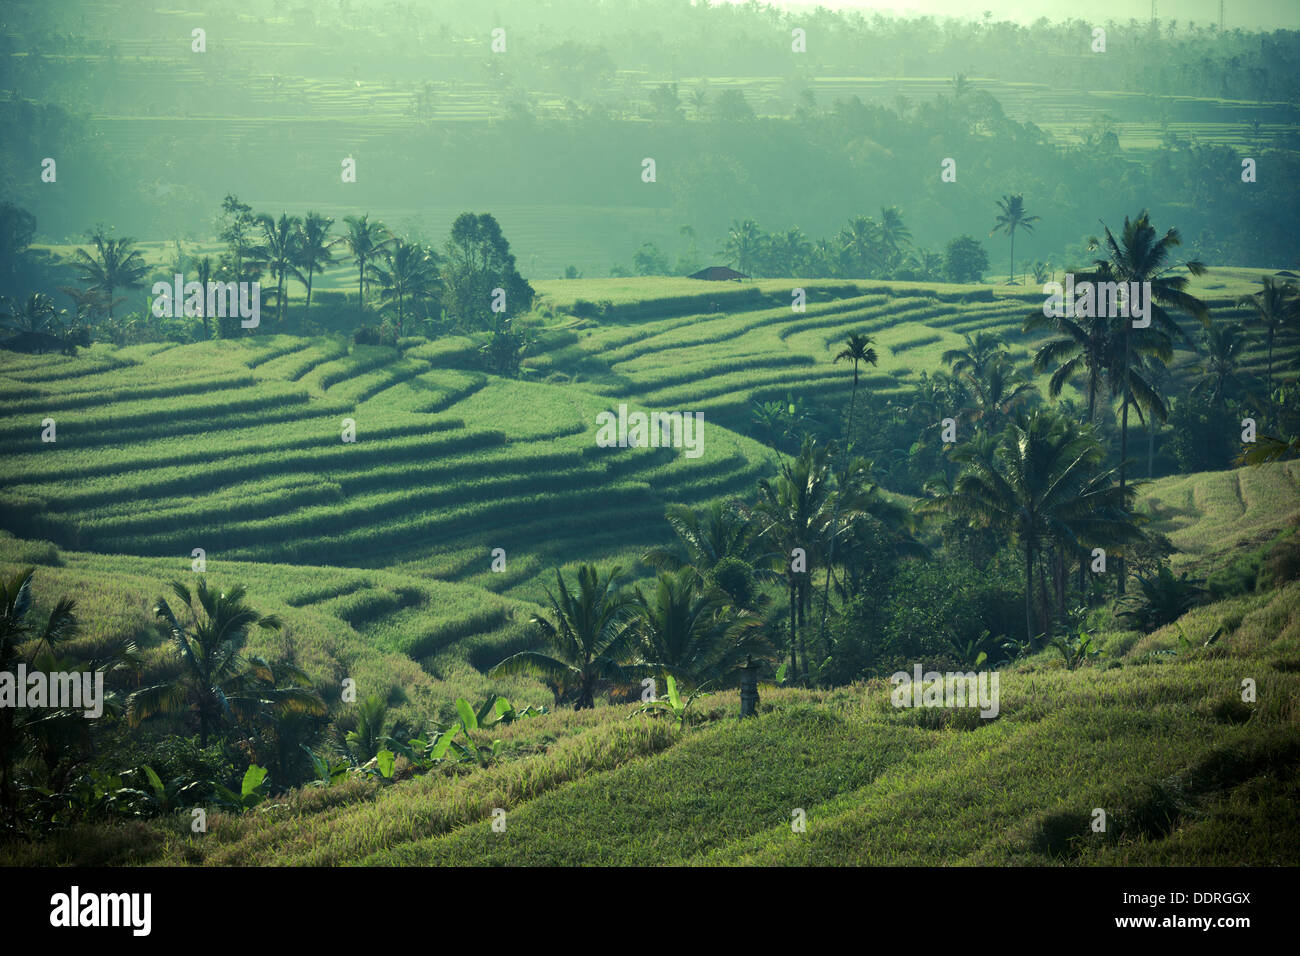 Indonesia, Bali, Jatiluwih Rice Terraces Stock Photo